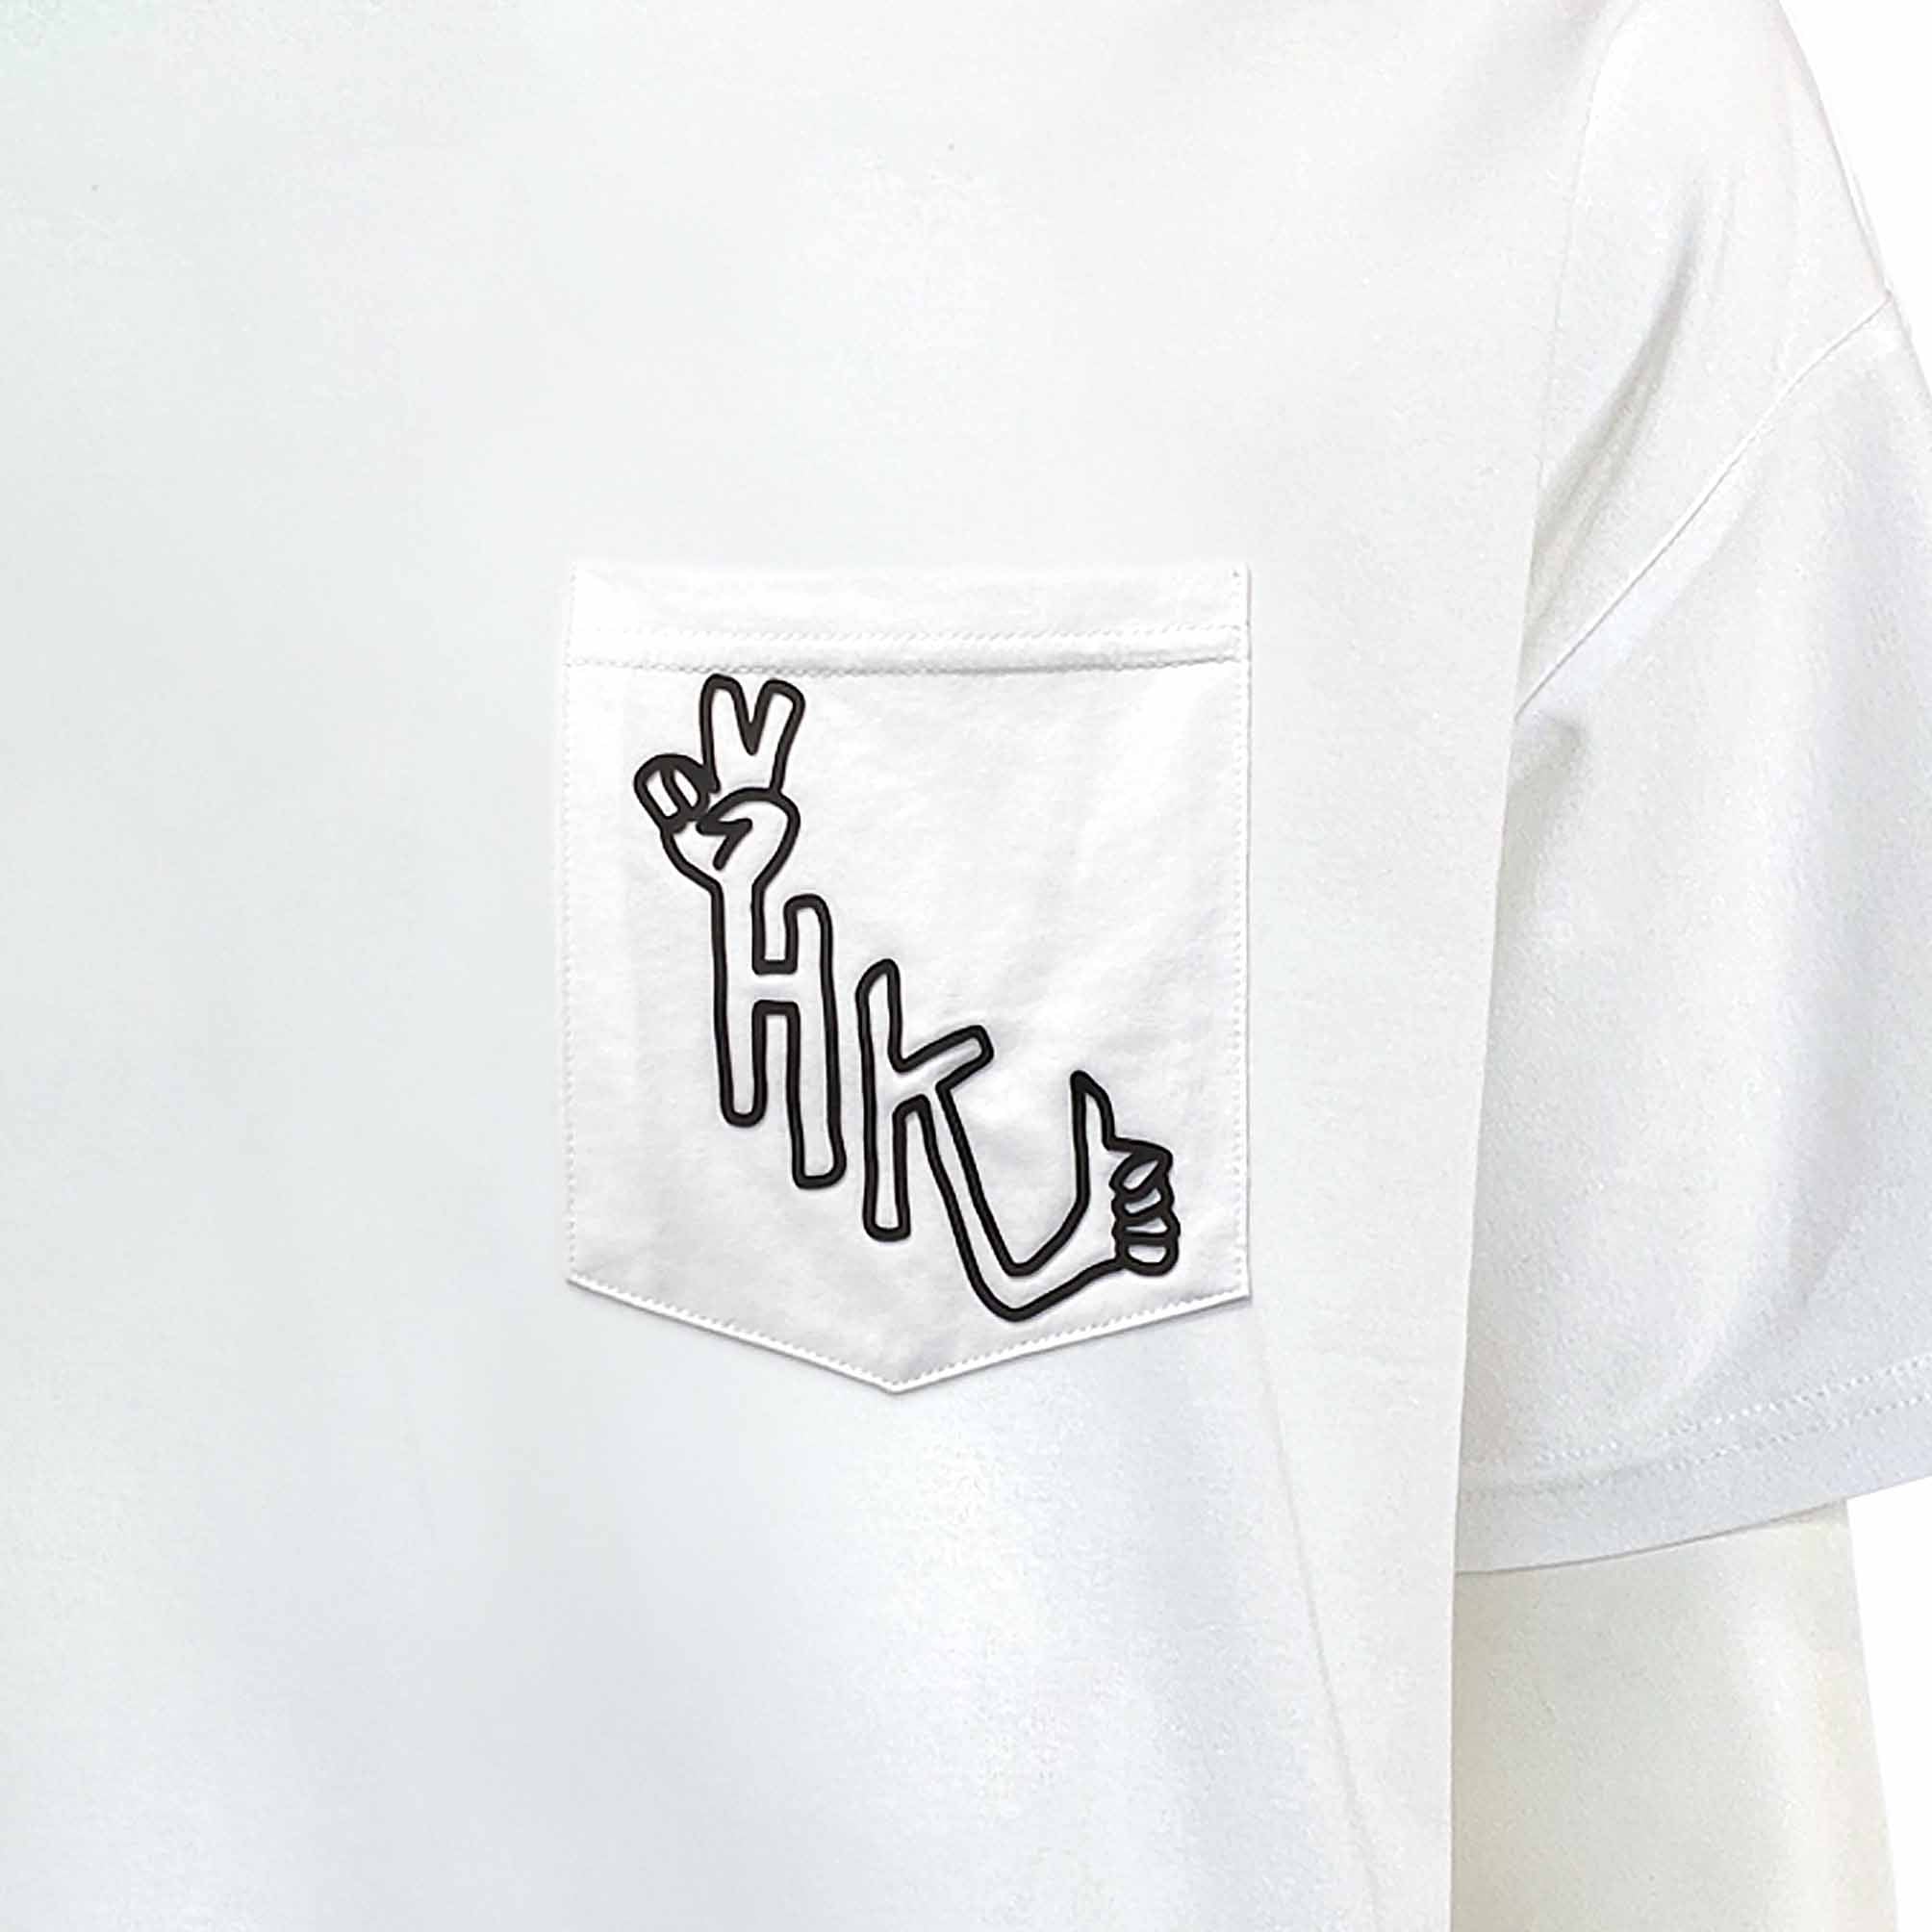 YeaHK Oversized Pocket T-shirt, White